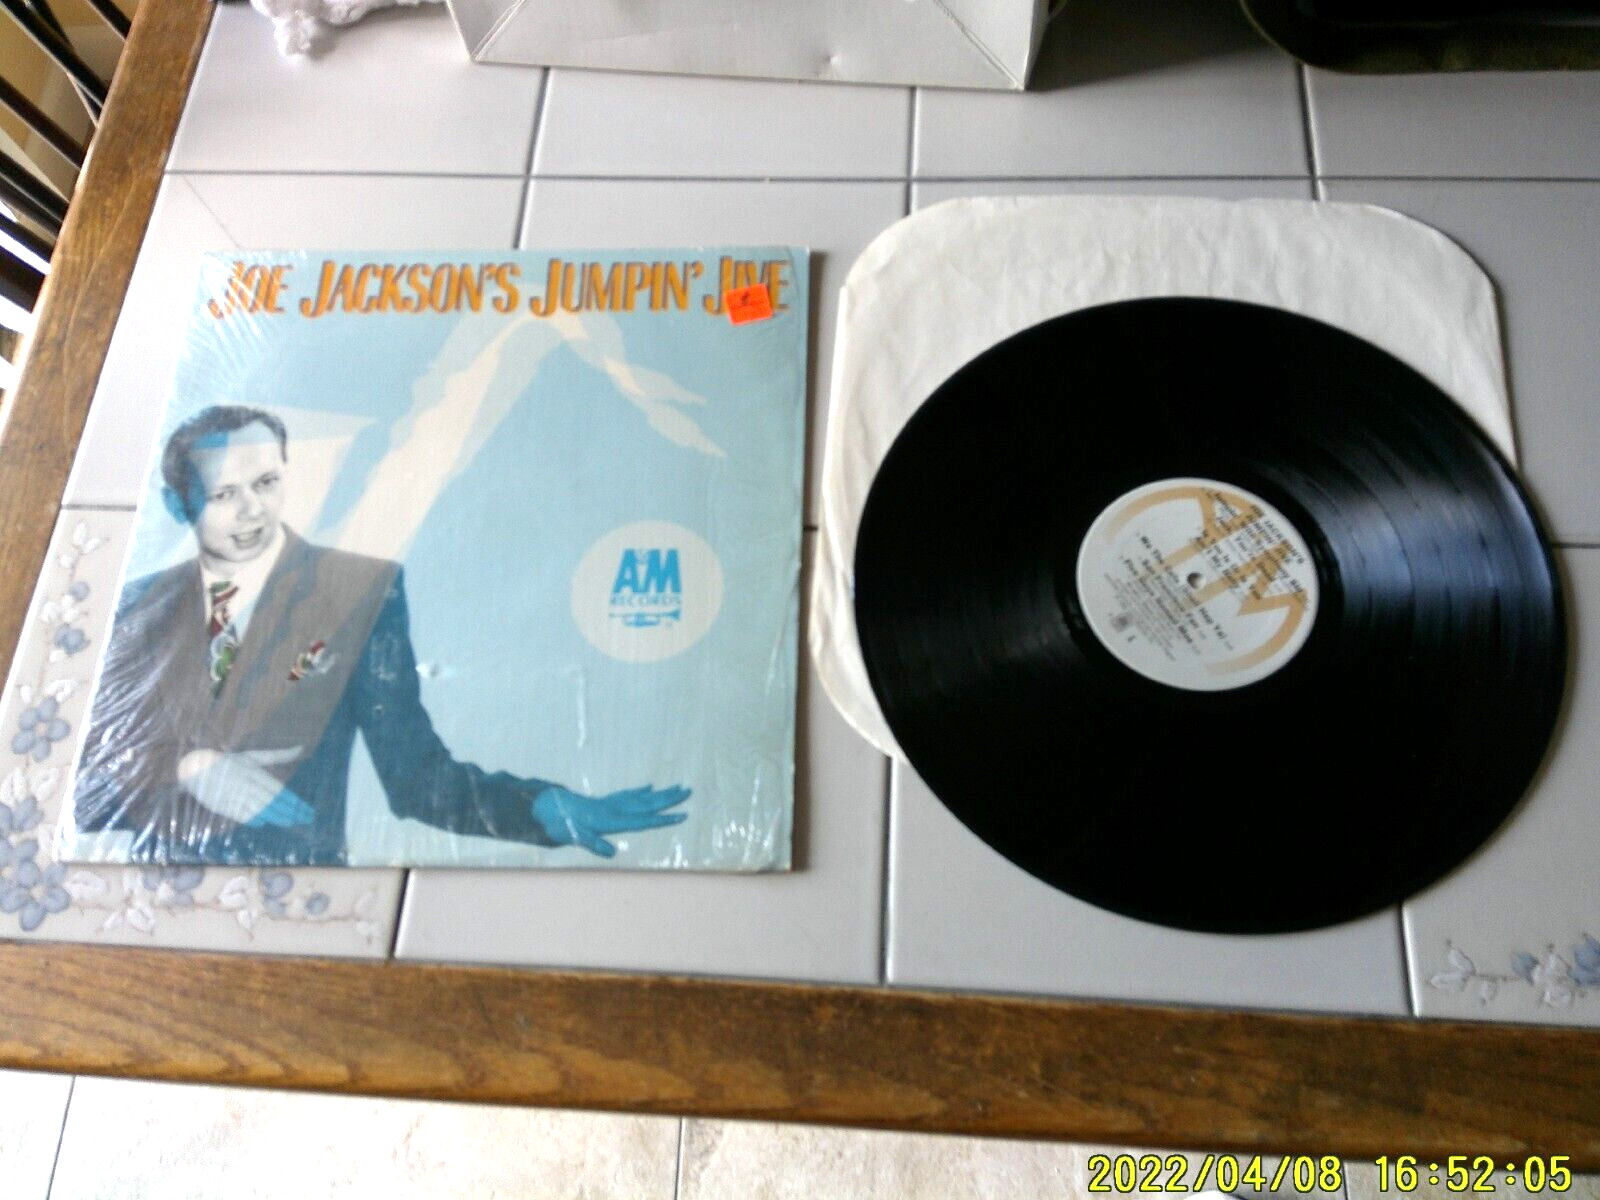 Joe Jackson's Jumpin' Jive 1981 US Vinyl Album Swing & Jump Blues LP Used A&M